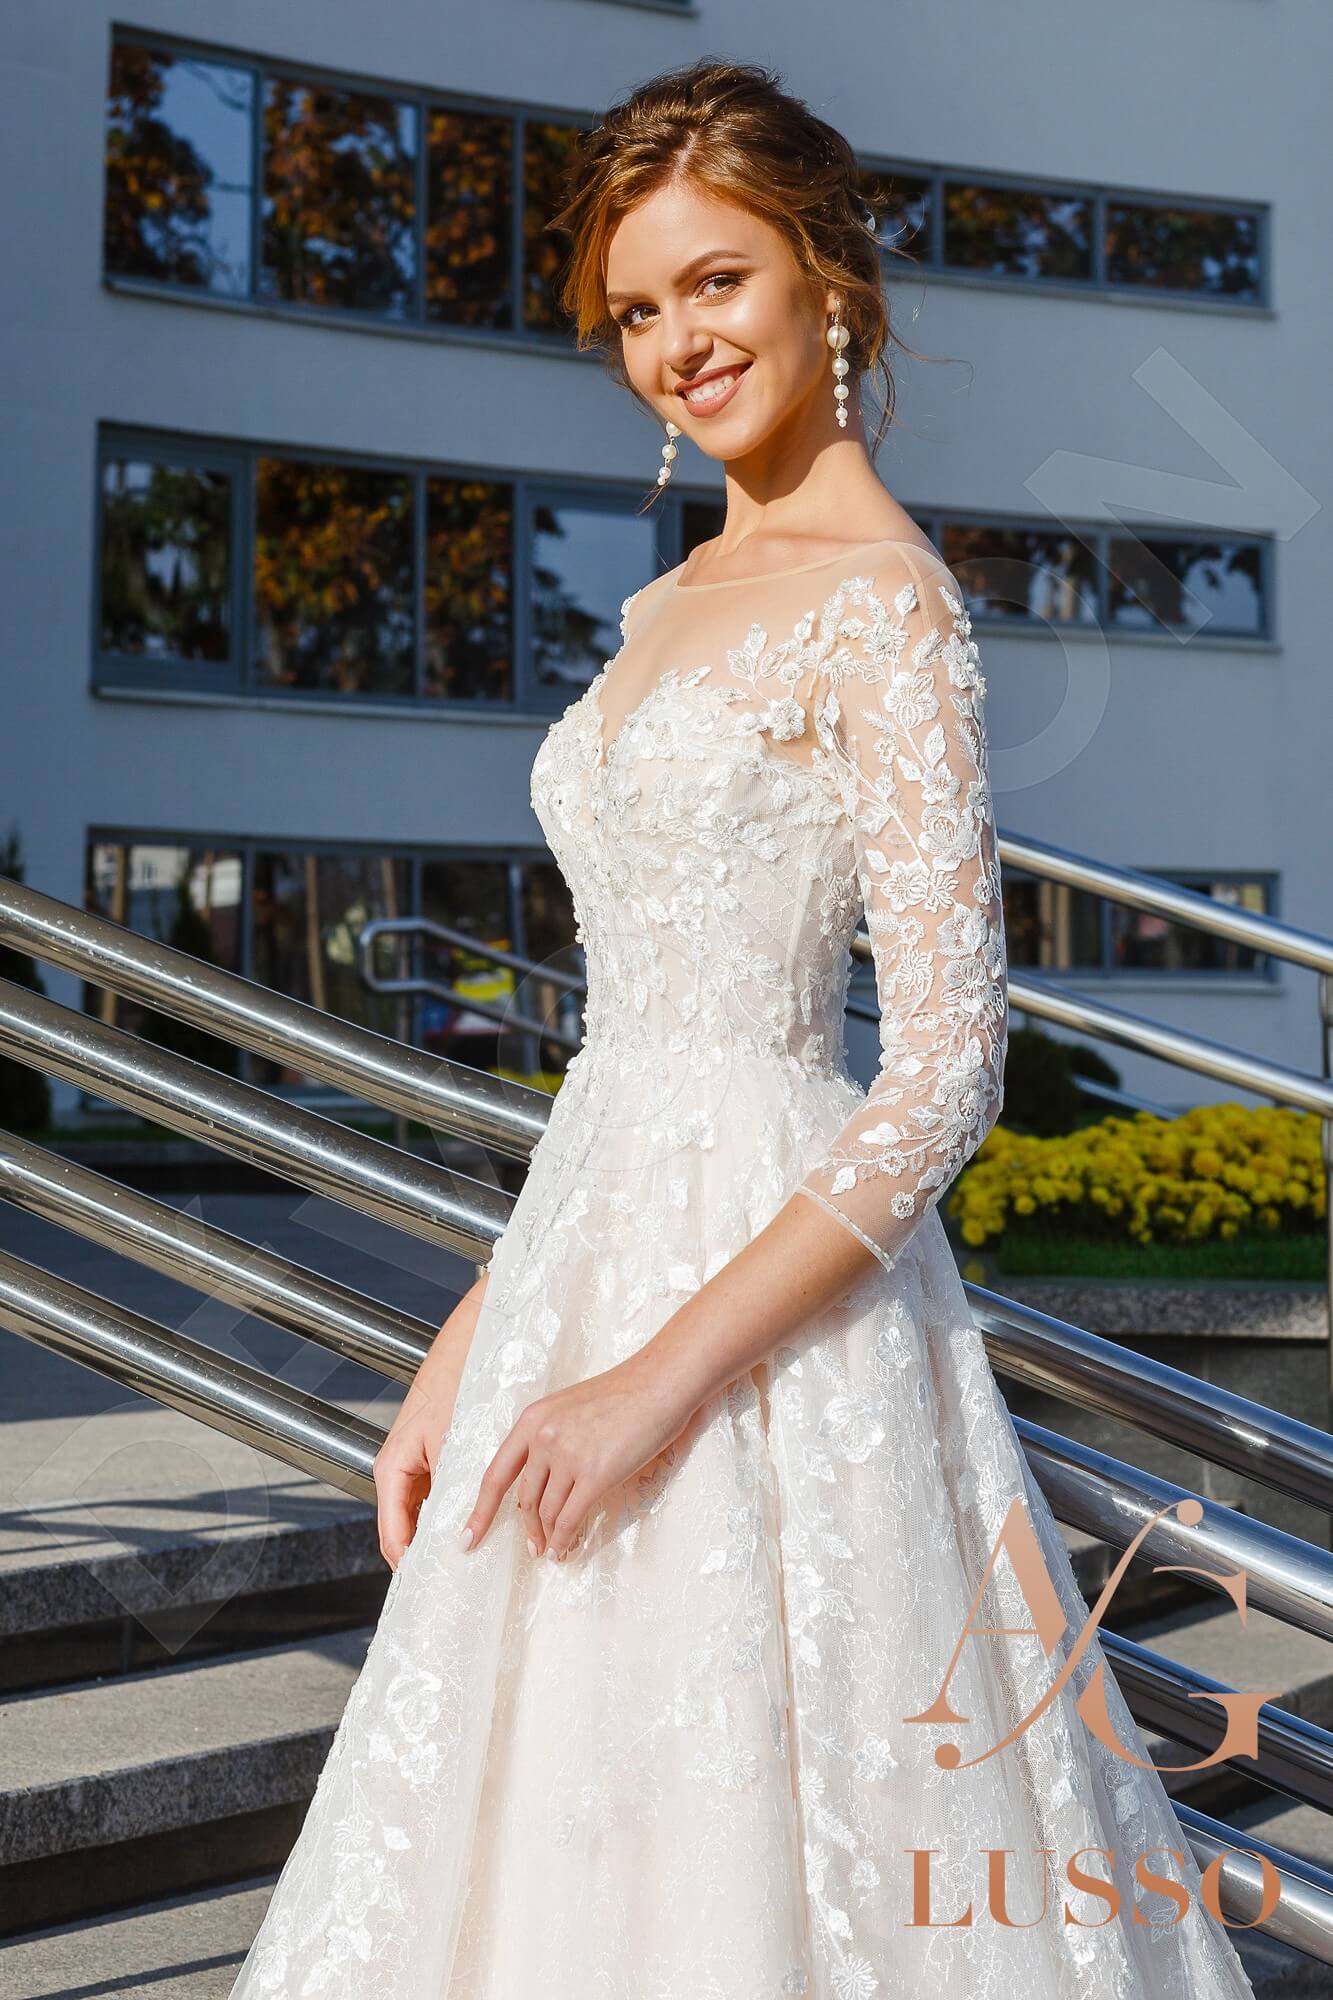 Lizzi Open back A-line 3/4 sleeve Wedding Dress 2